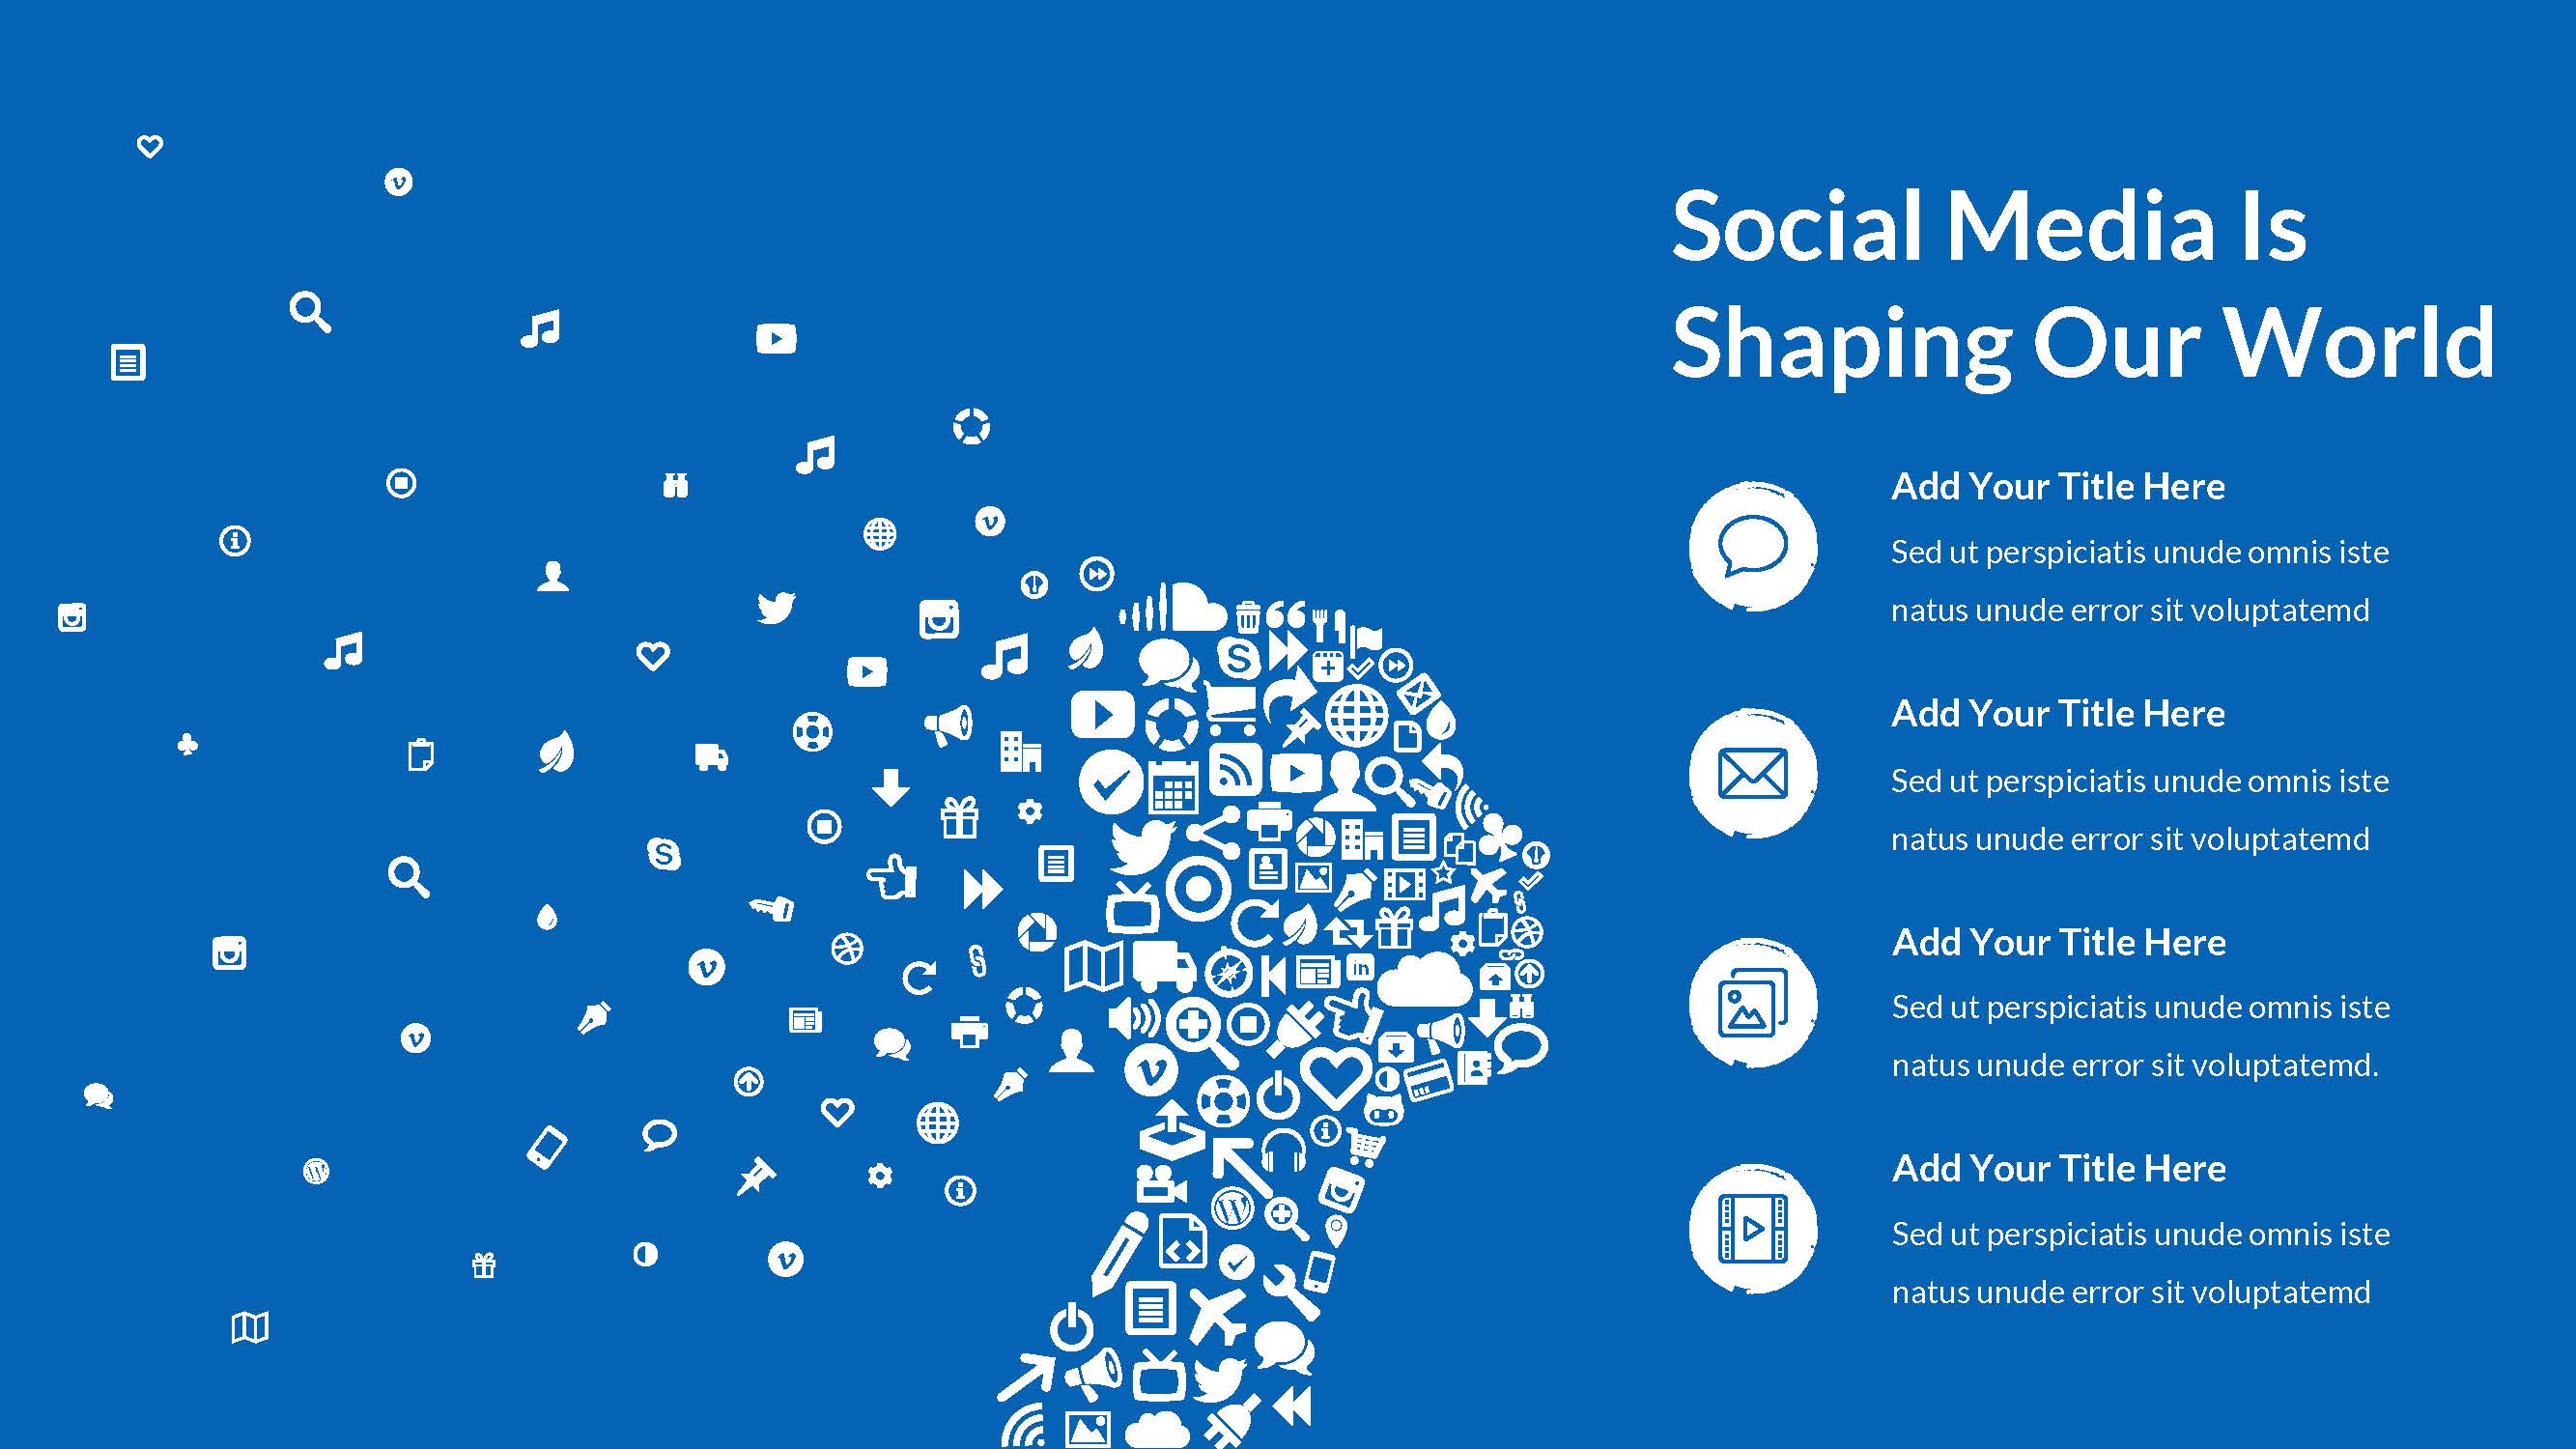 social-media-marketing-google-slides-pitch-deck-by-spriteit-graphicriver